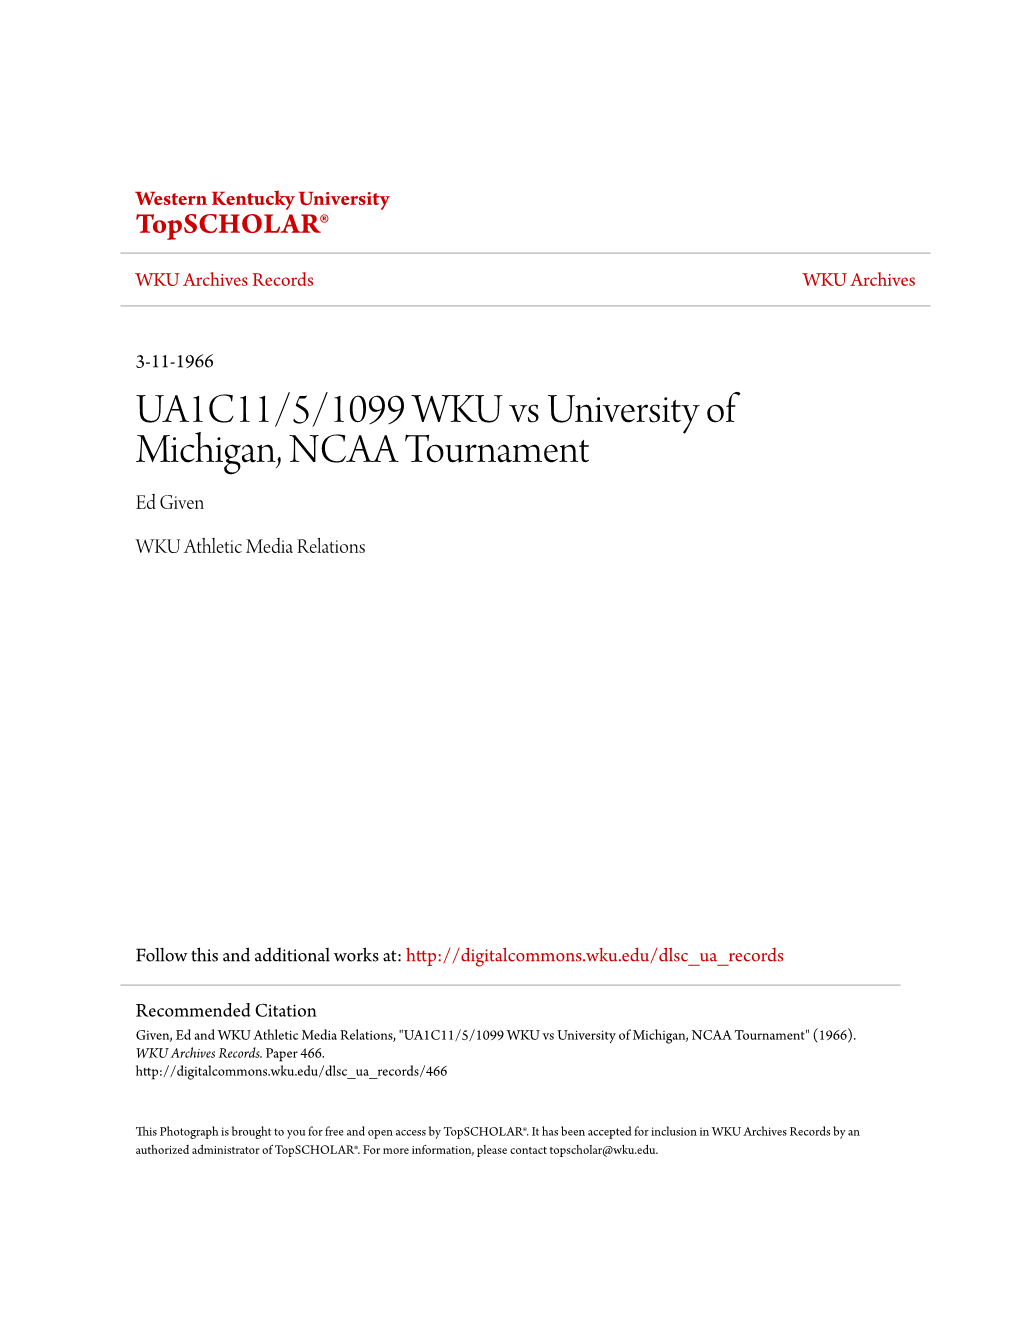 UA1C11/5/1099 WKU Vs University of Michigan, NCAA Tournament Ed Given